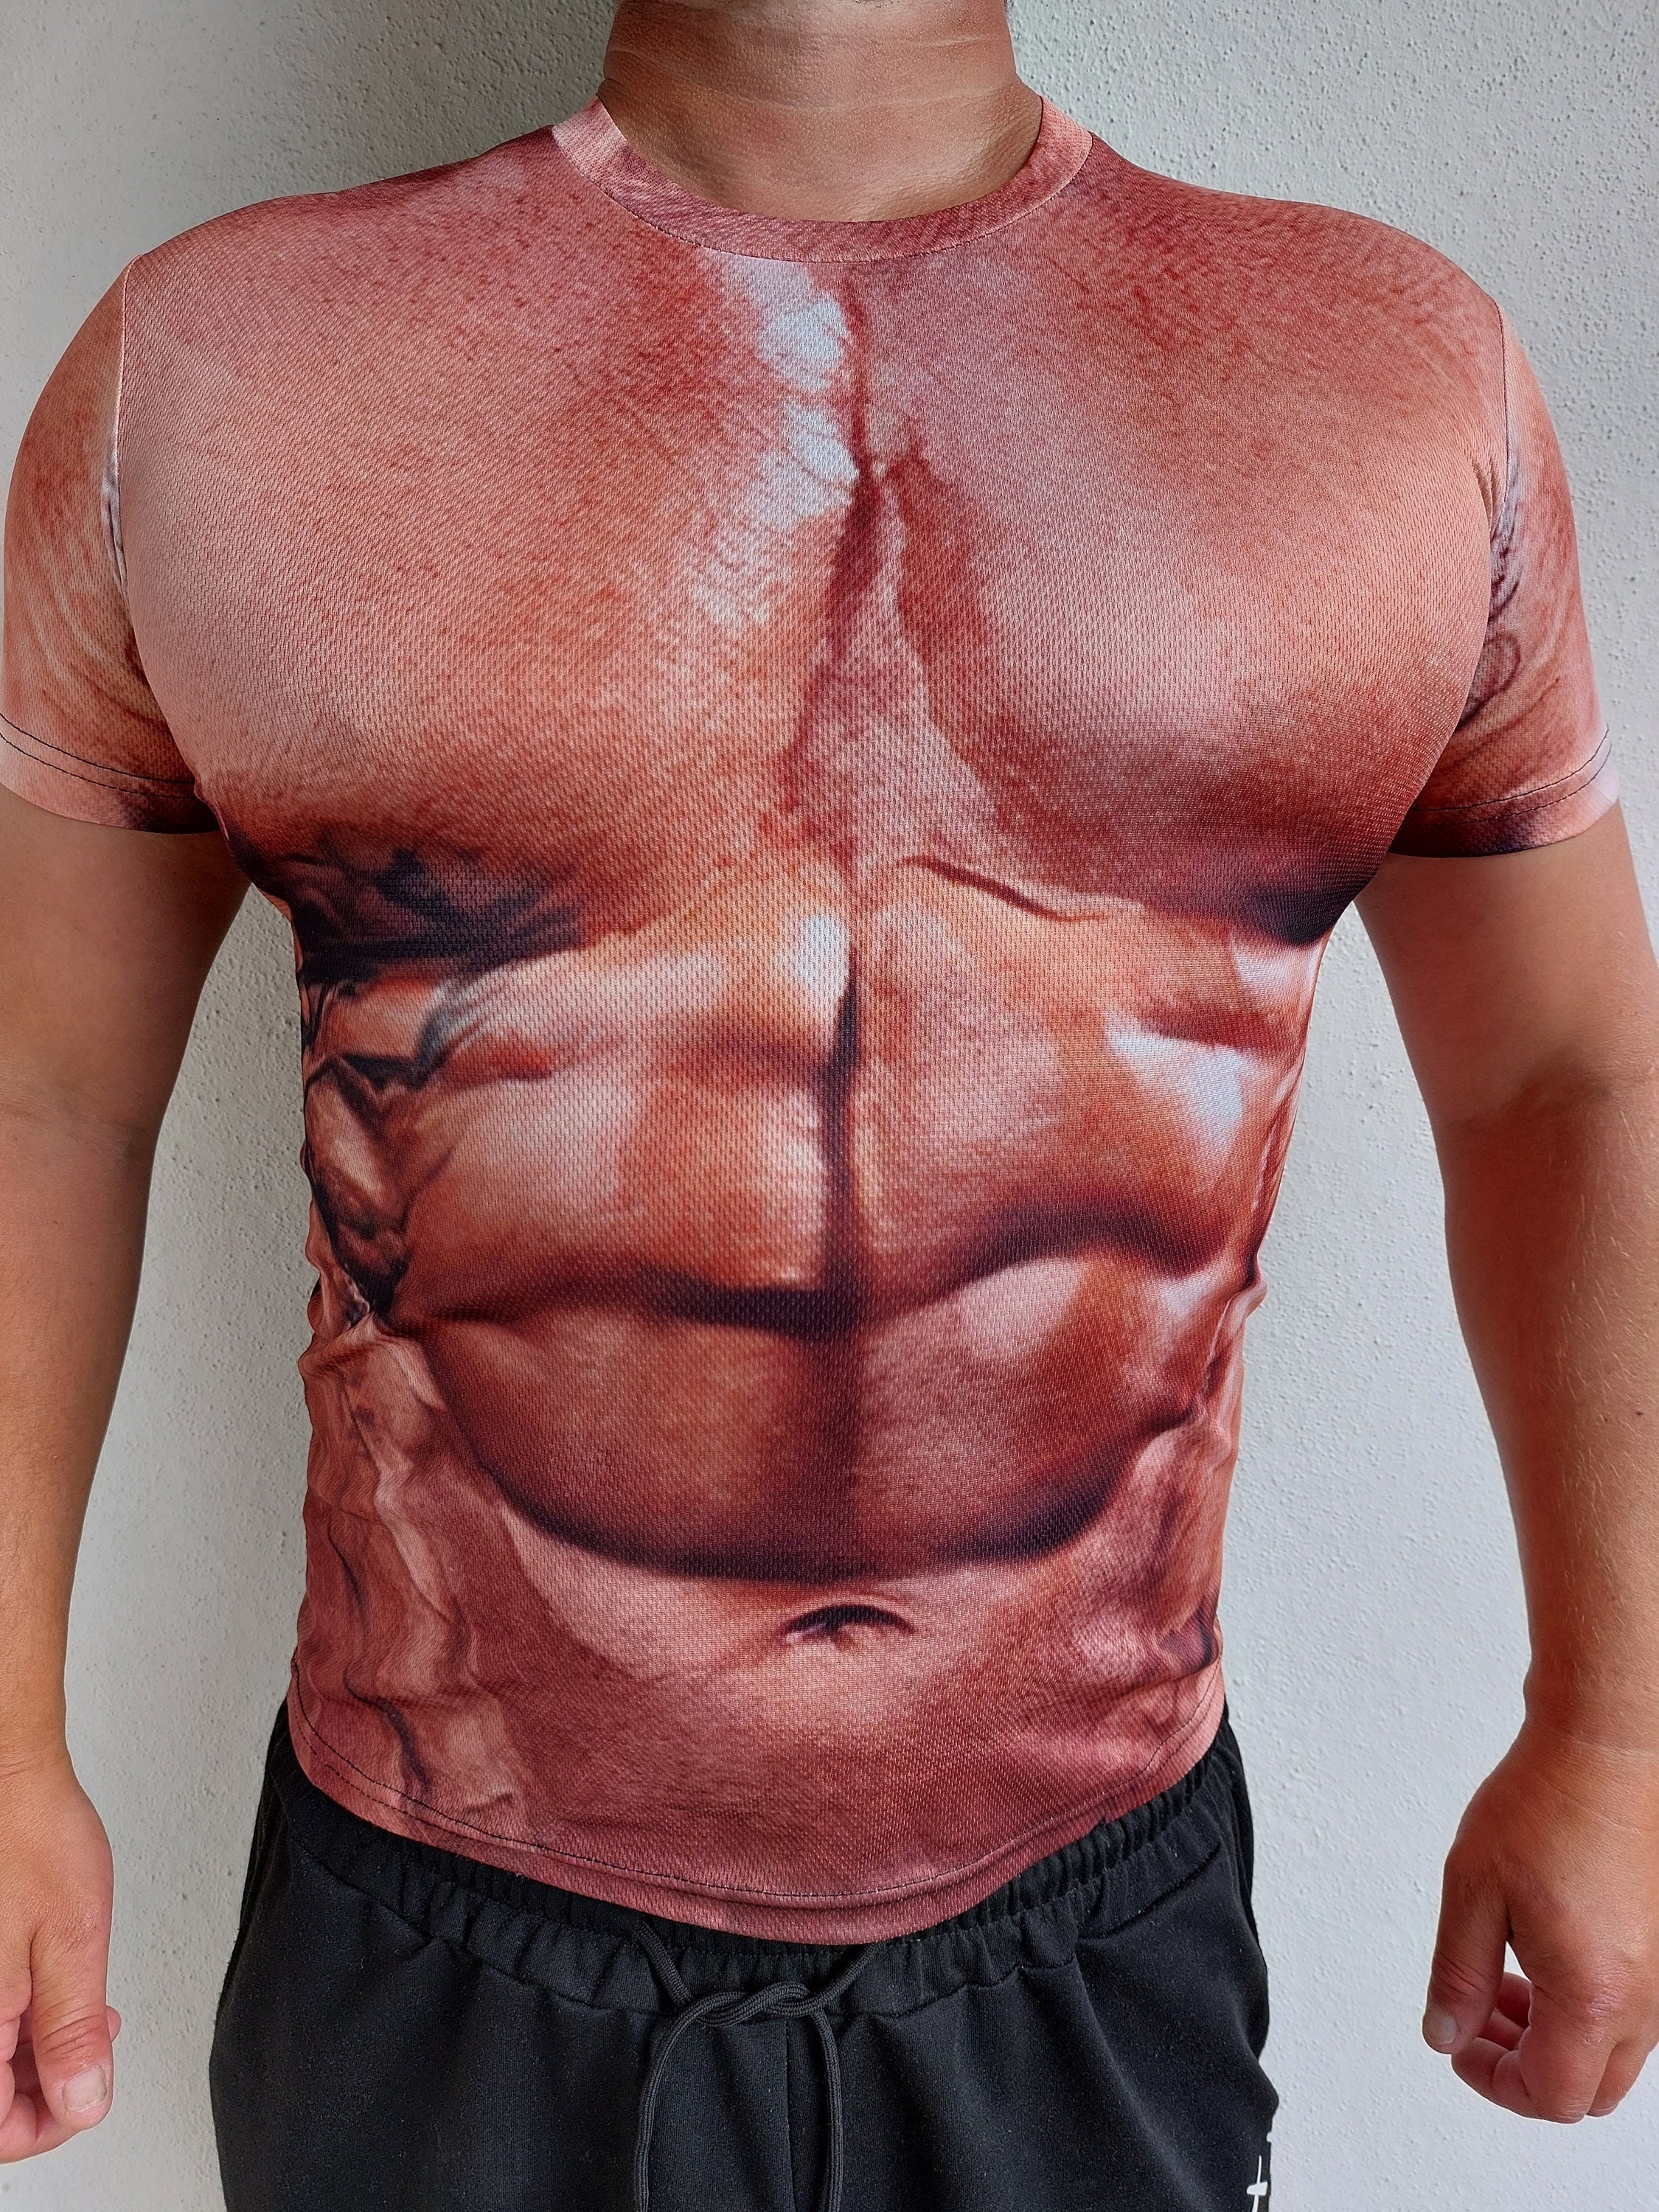 Men Funny 3D Muscle T-Shirt Tops Naked T-Shirts Men Nude T-Shirt